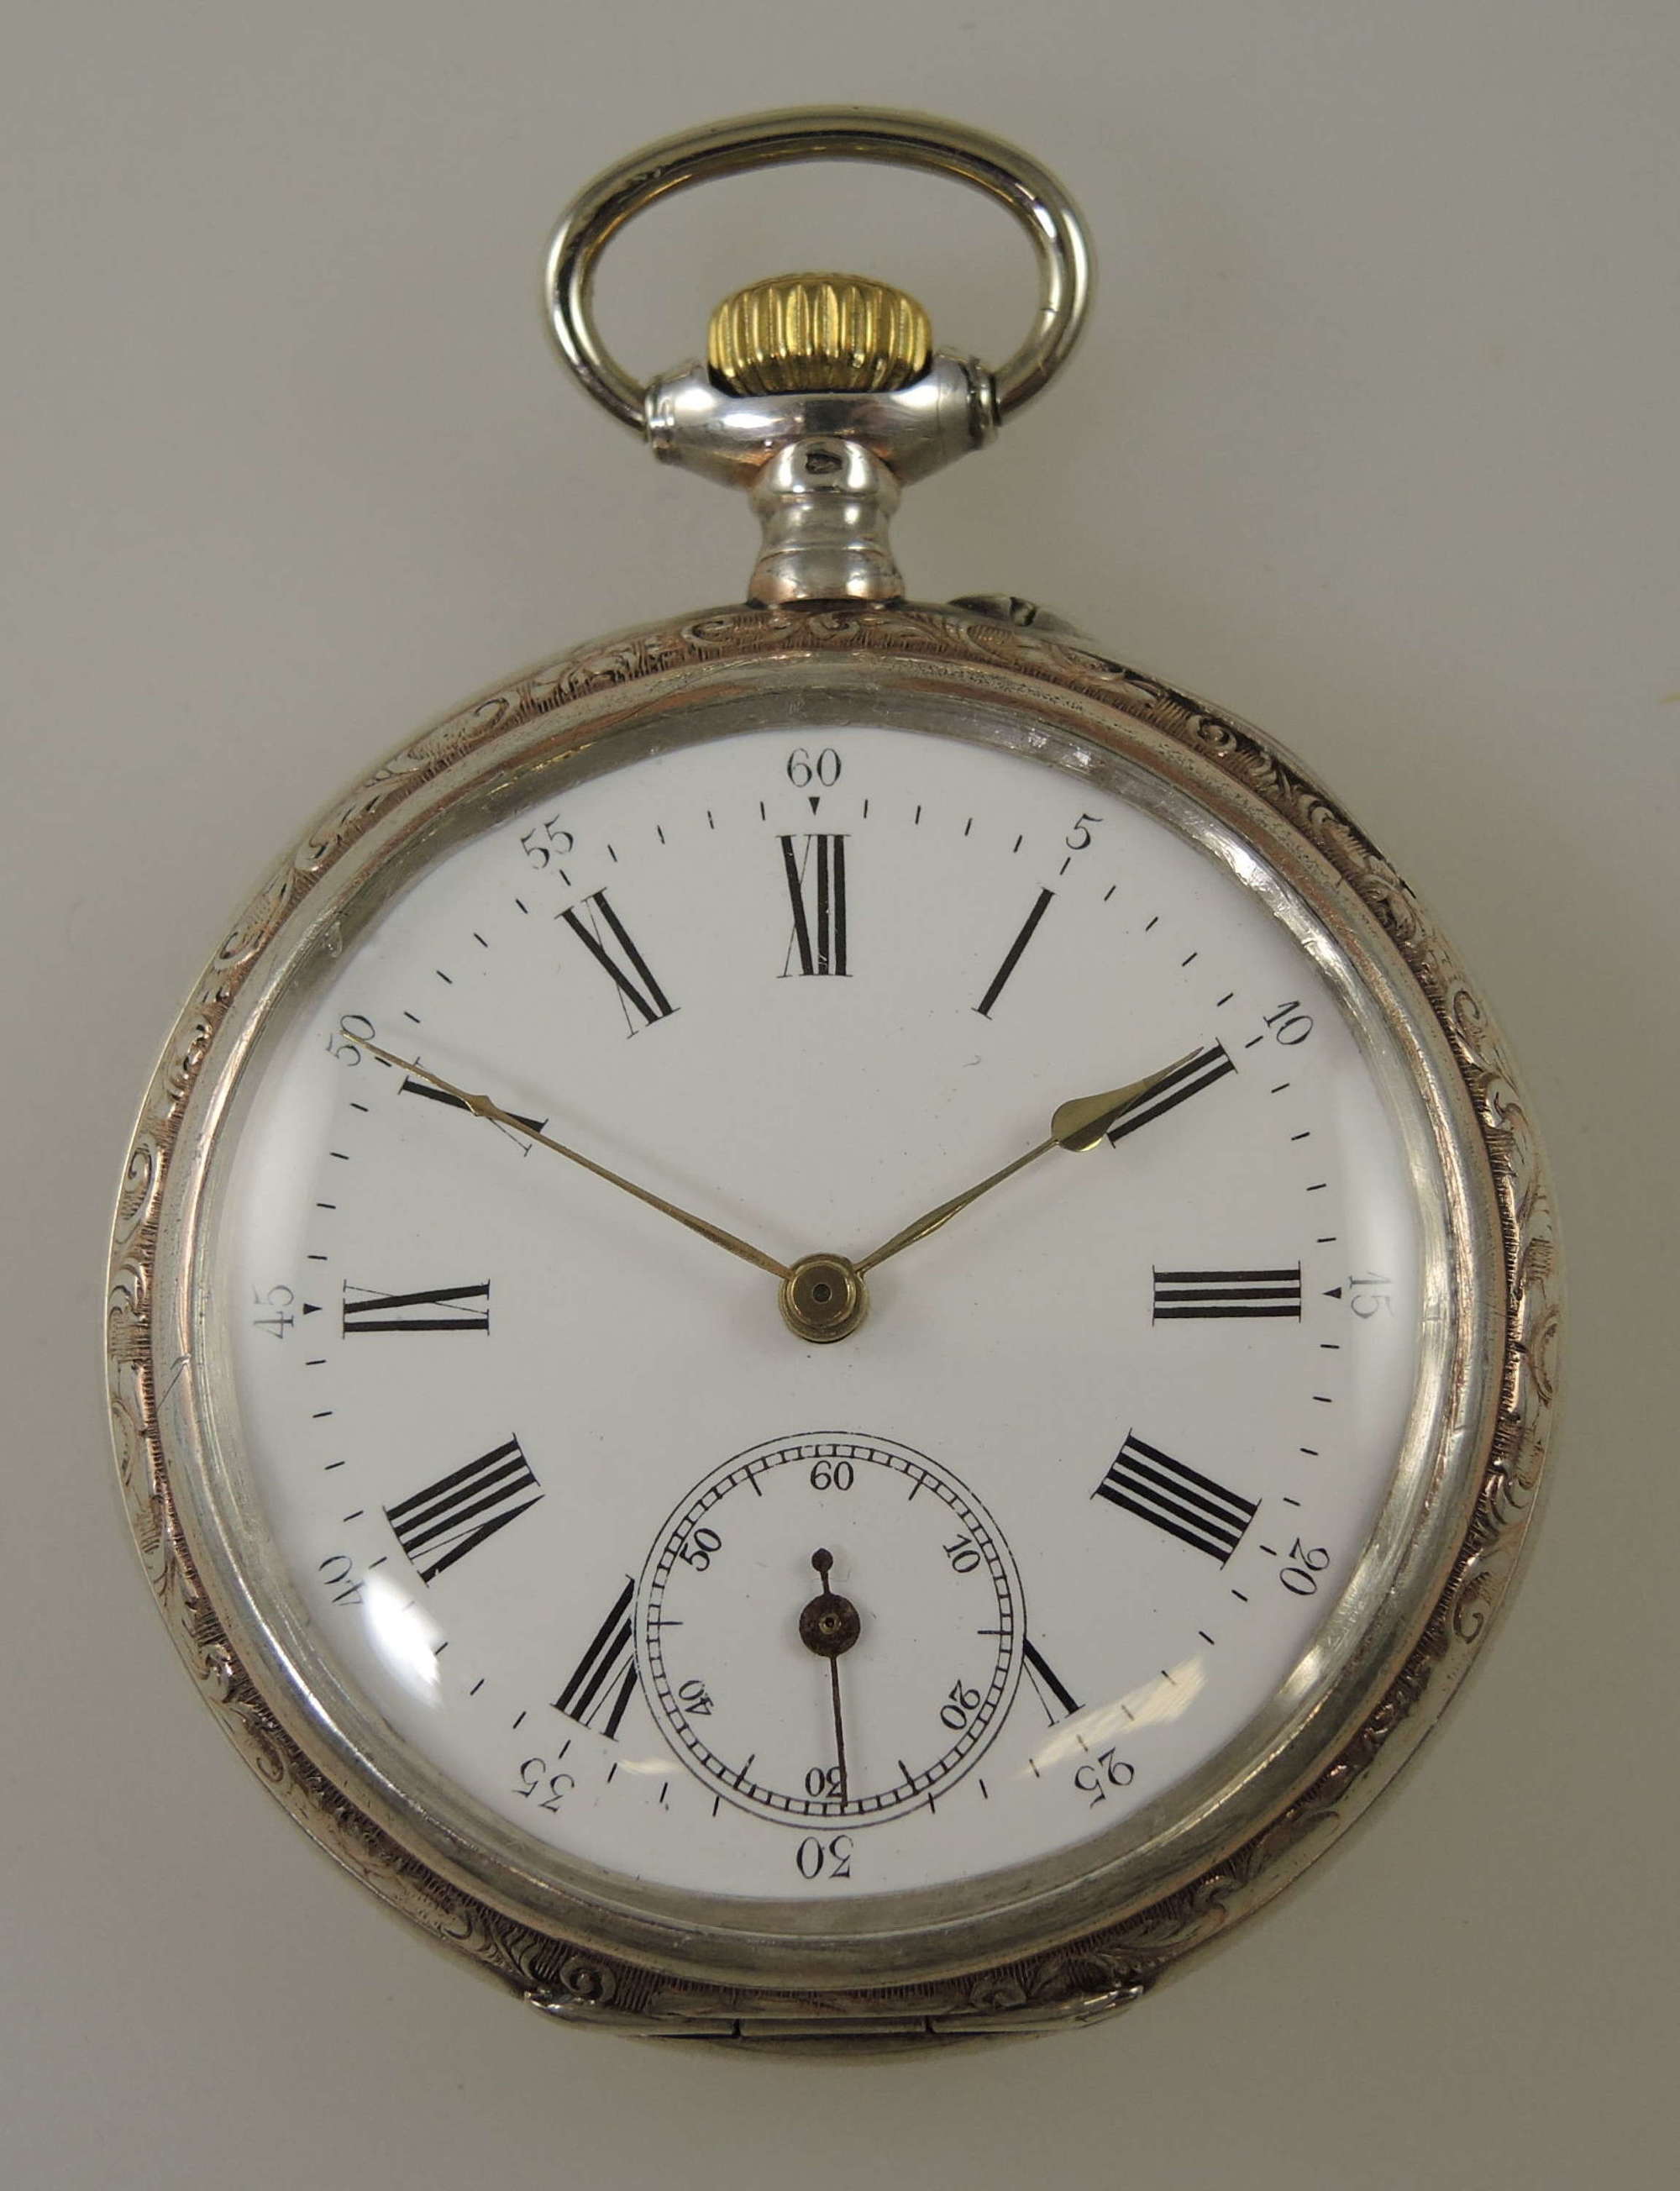 Antique silver pocket watch c1890